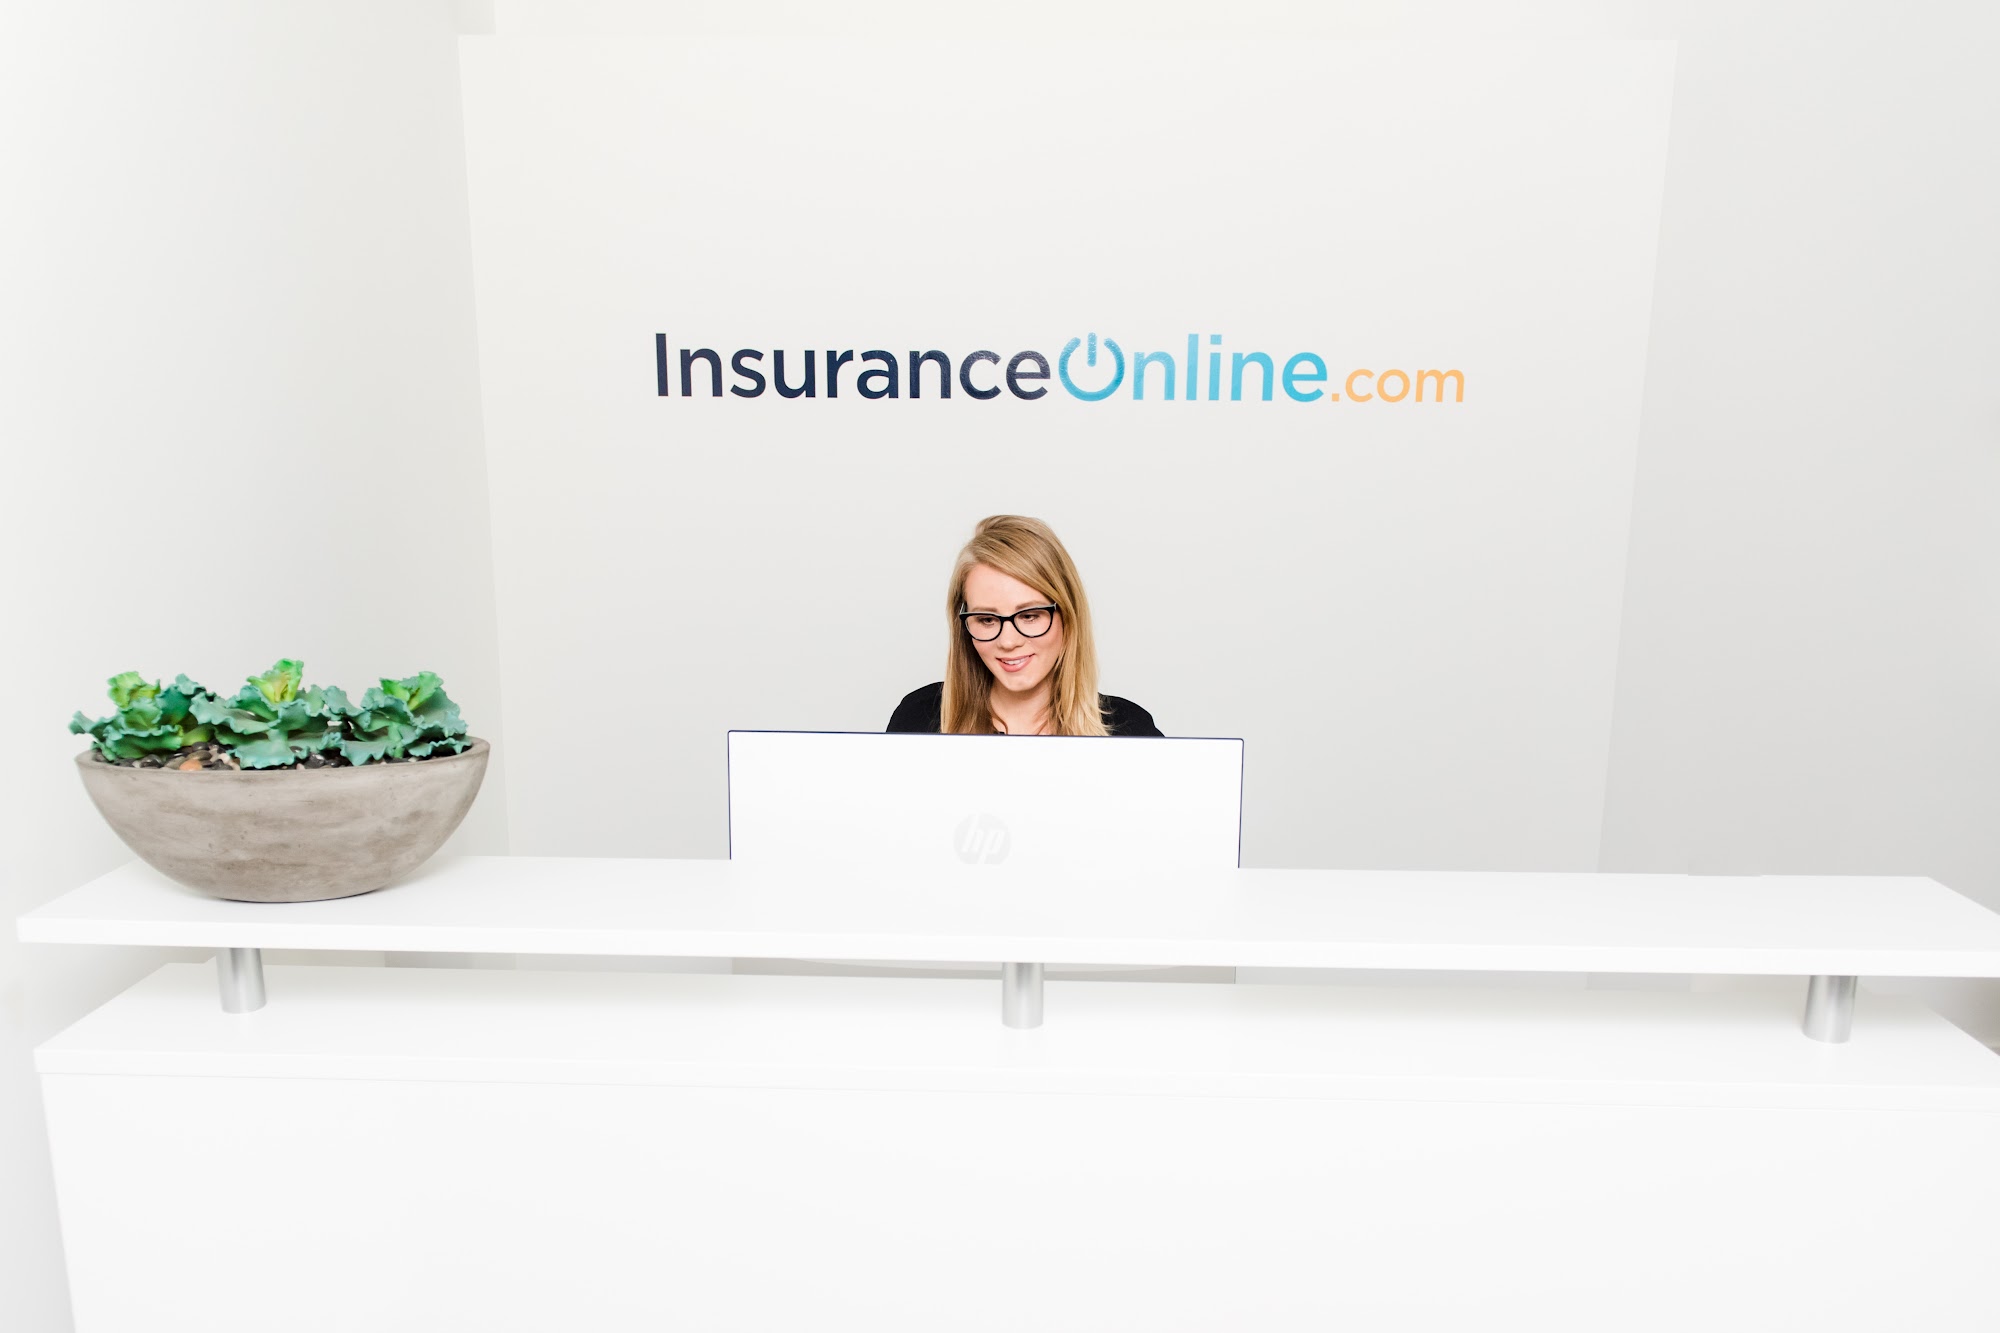 InsuranceOnline.com